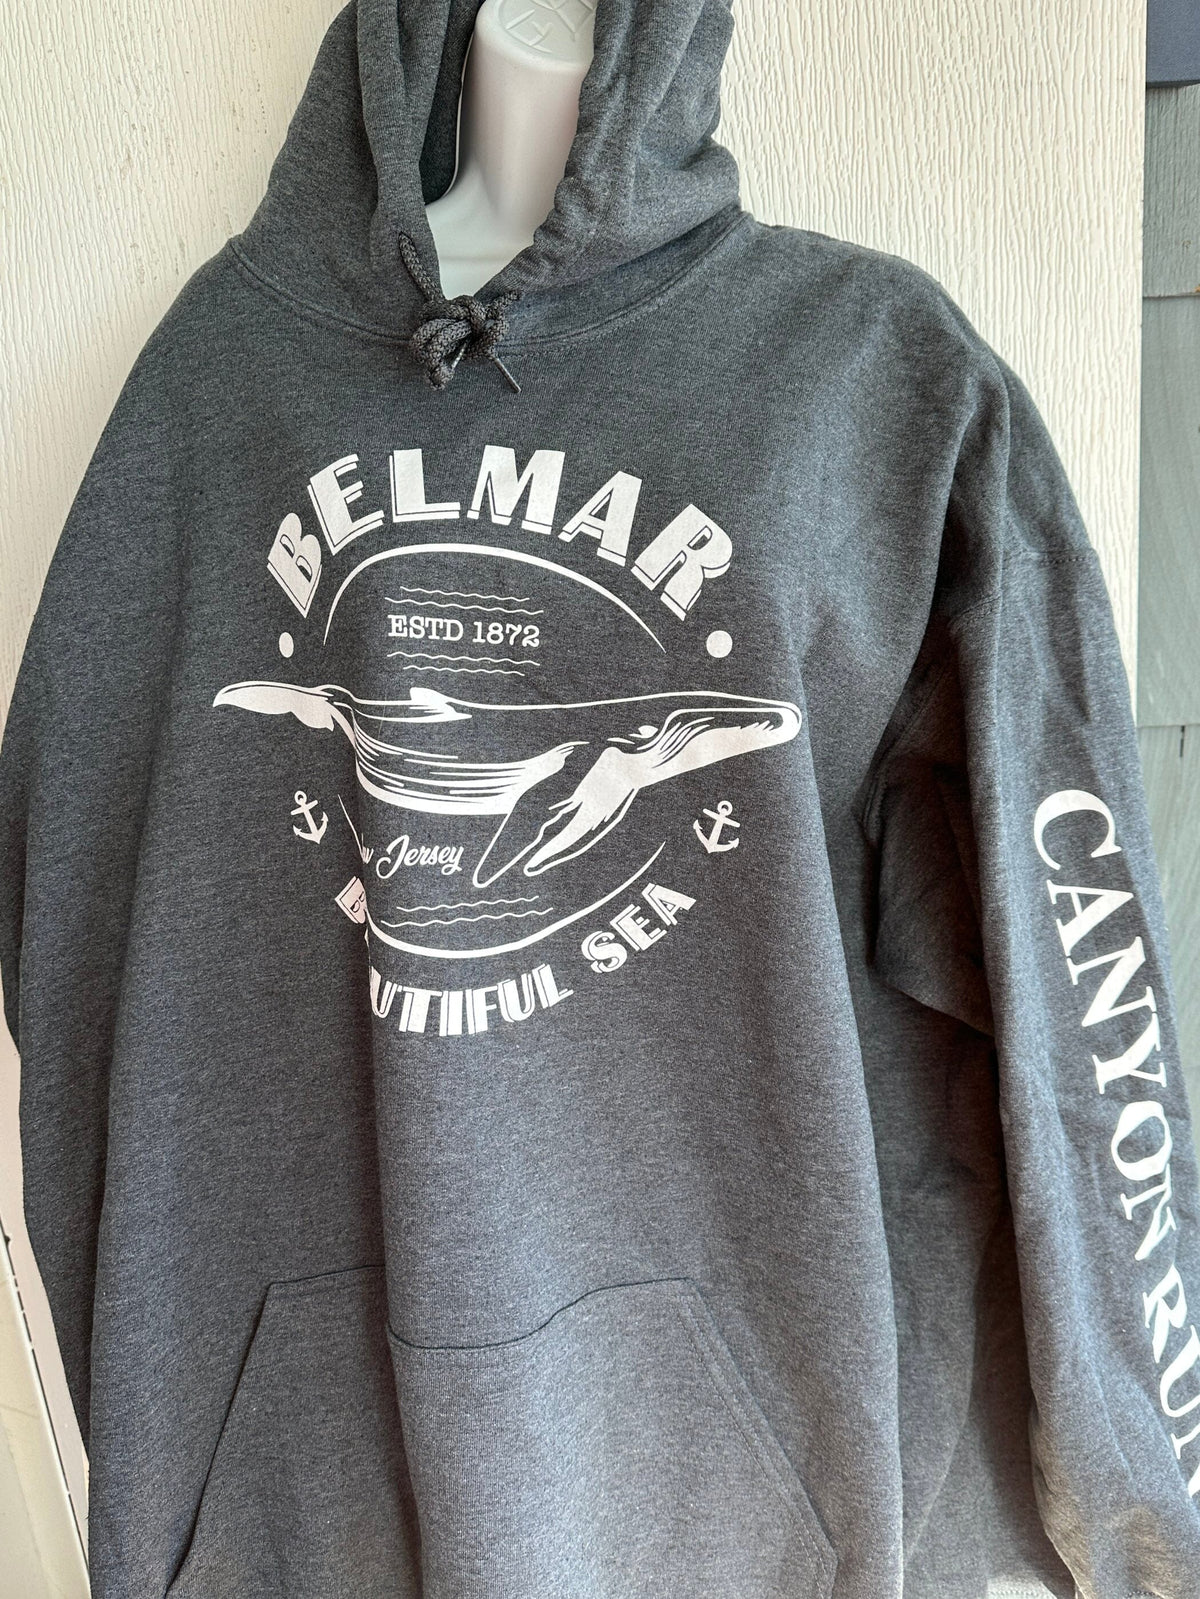 150th Anniversary Belmar Sweatshirt Whale Print Canyon Run Bill McKim Photography -Jersey Shore whale watch tours 